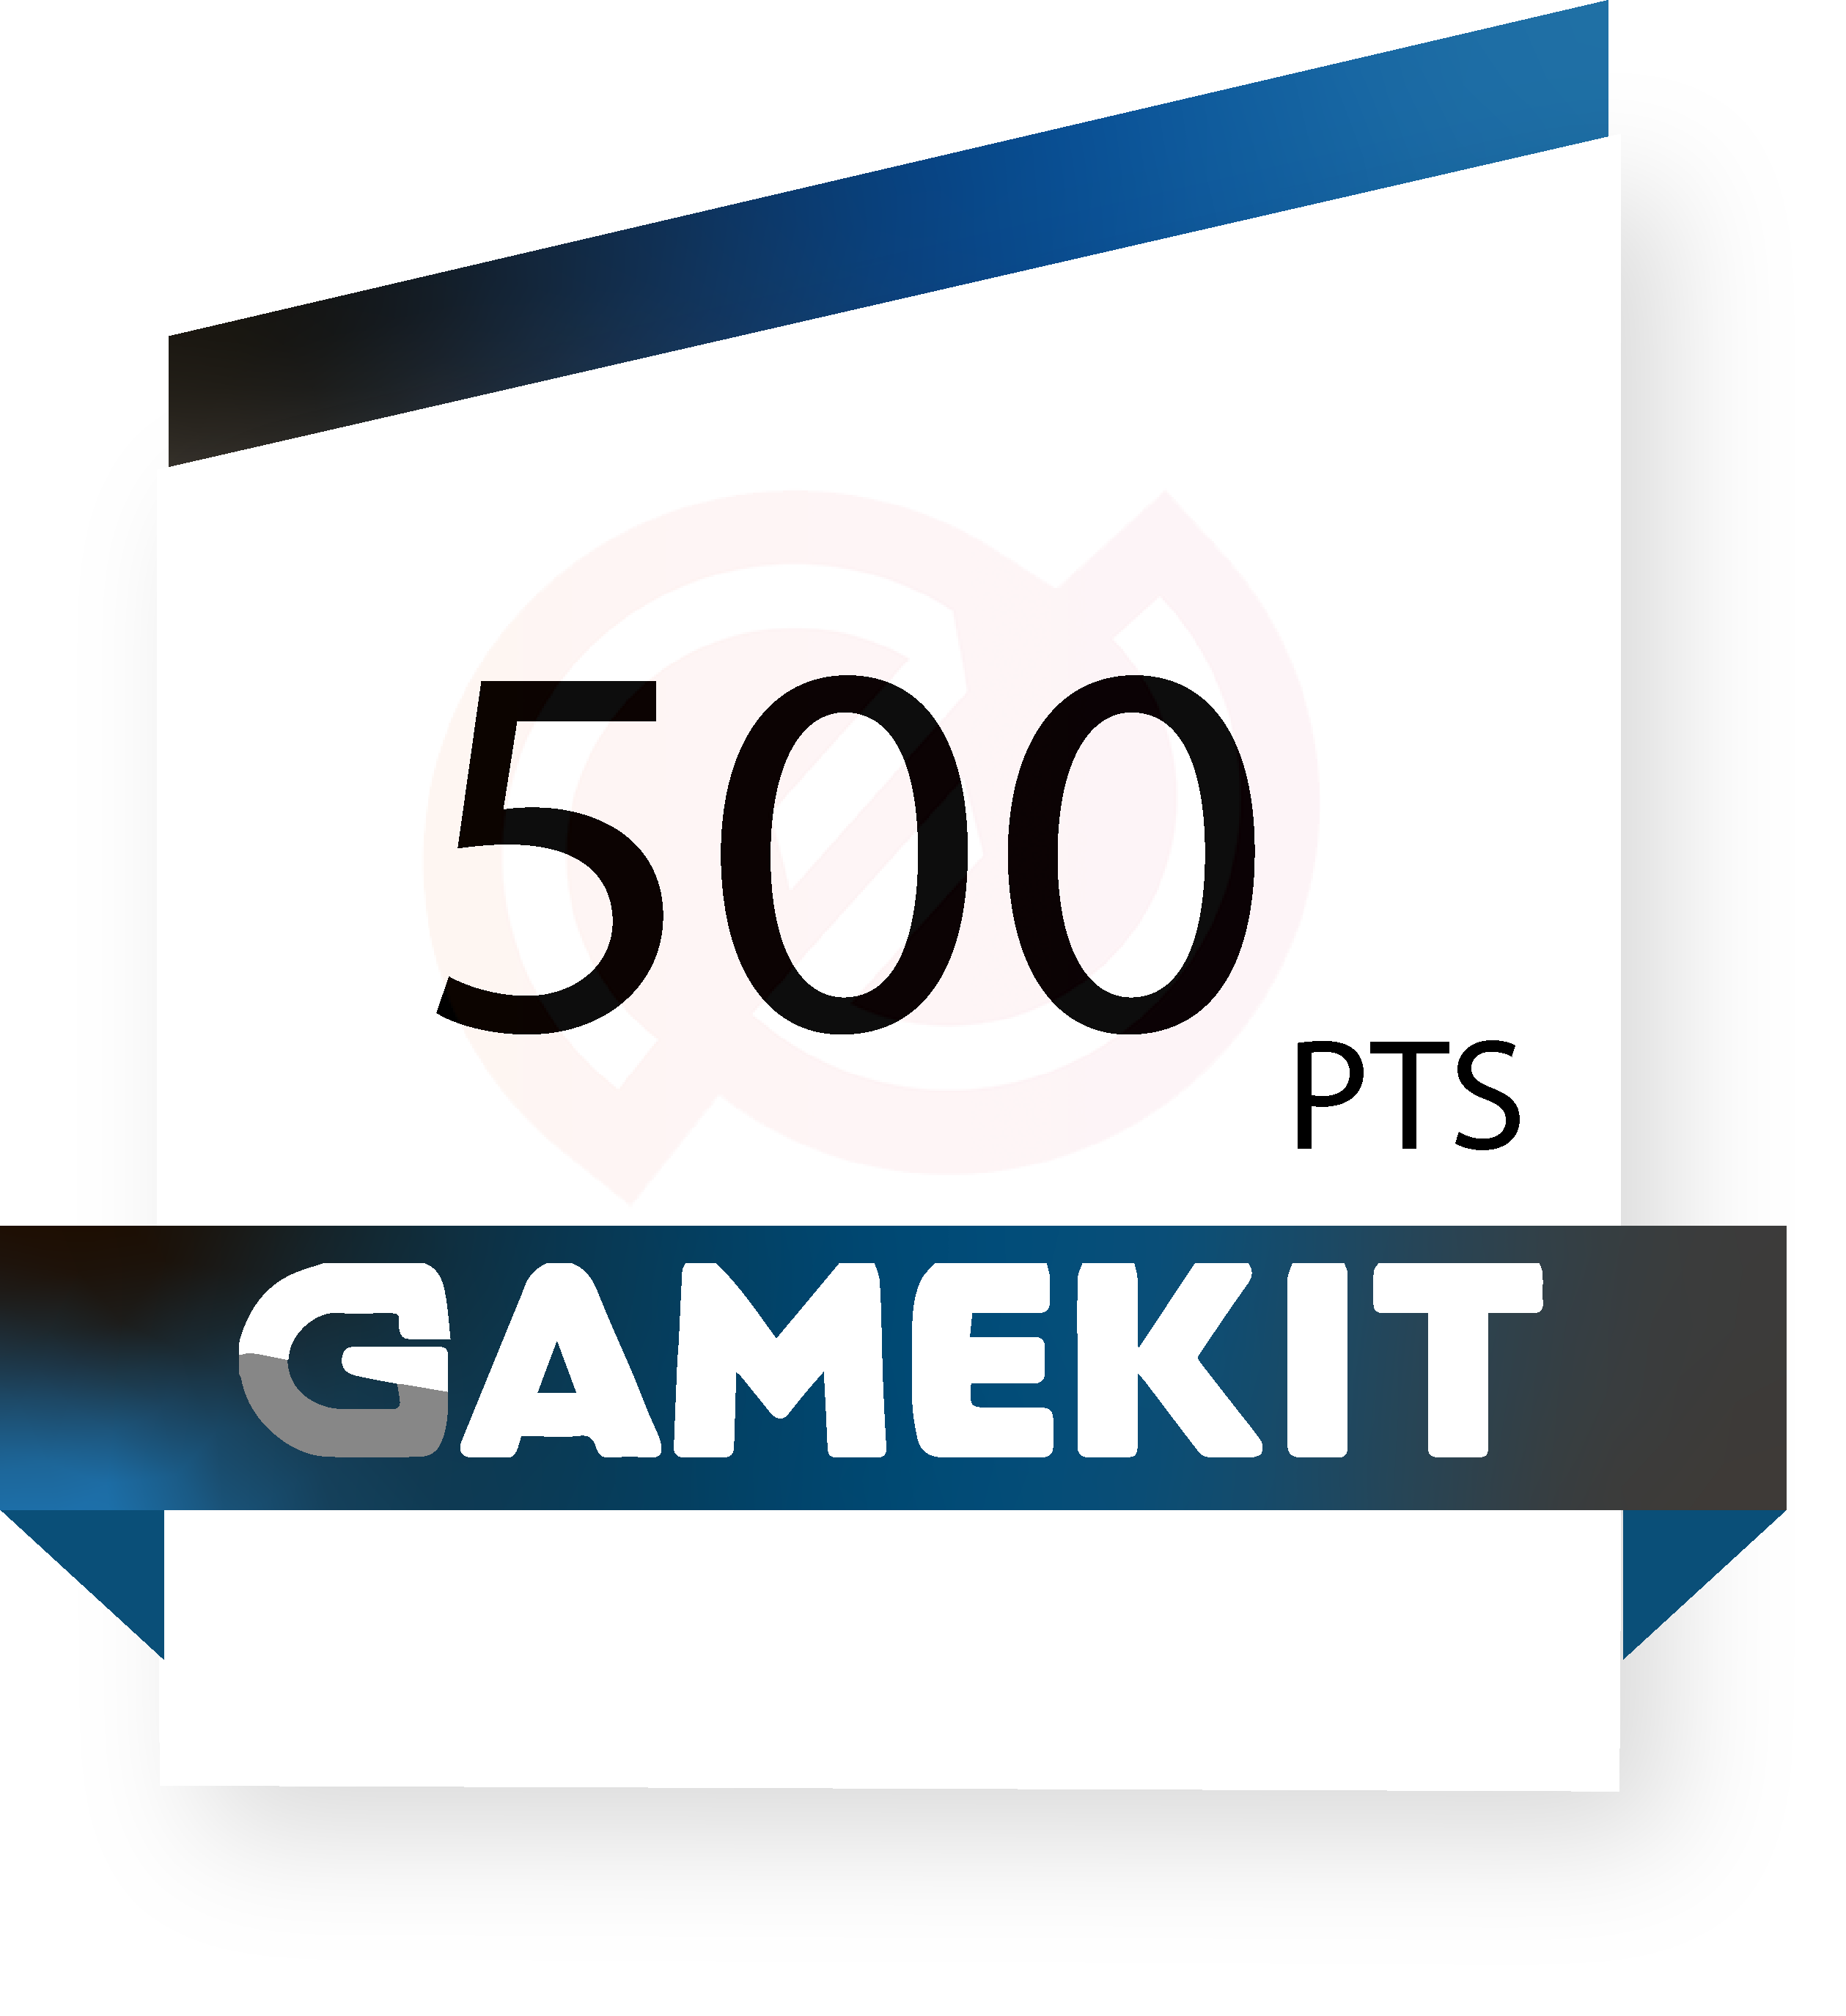 Gamekit : 500 points